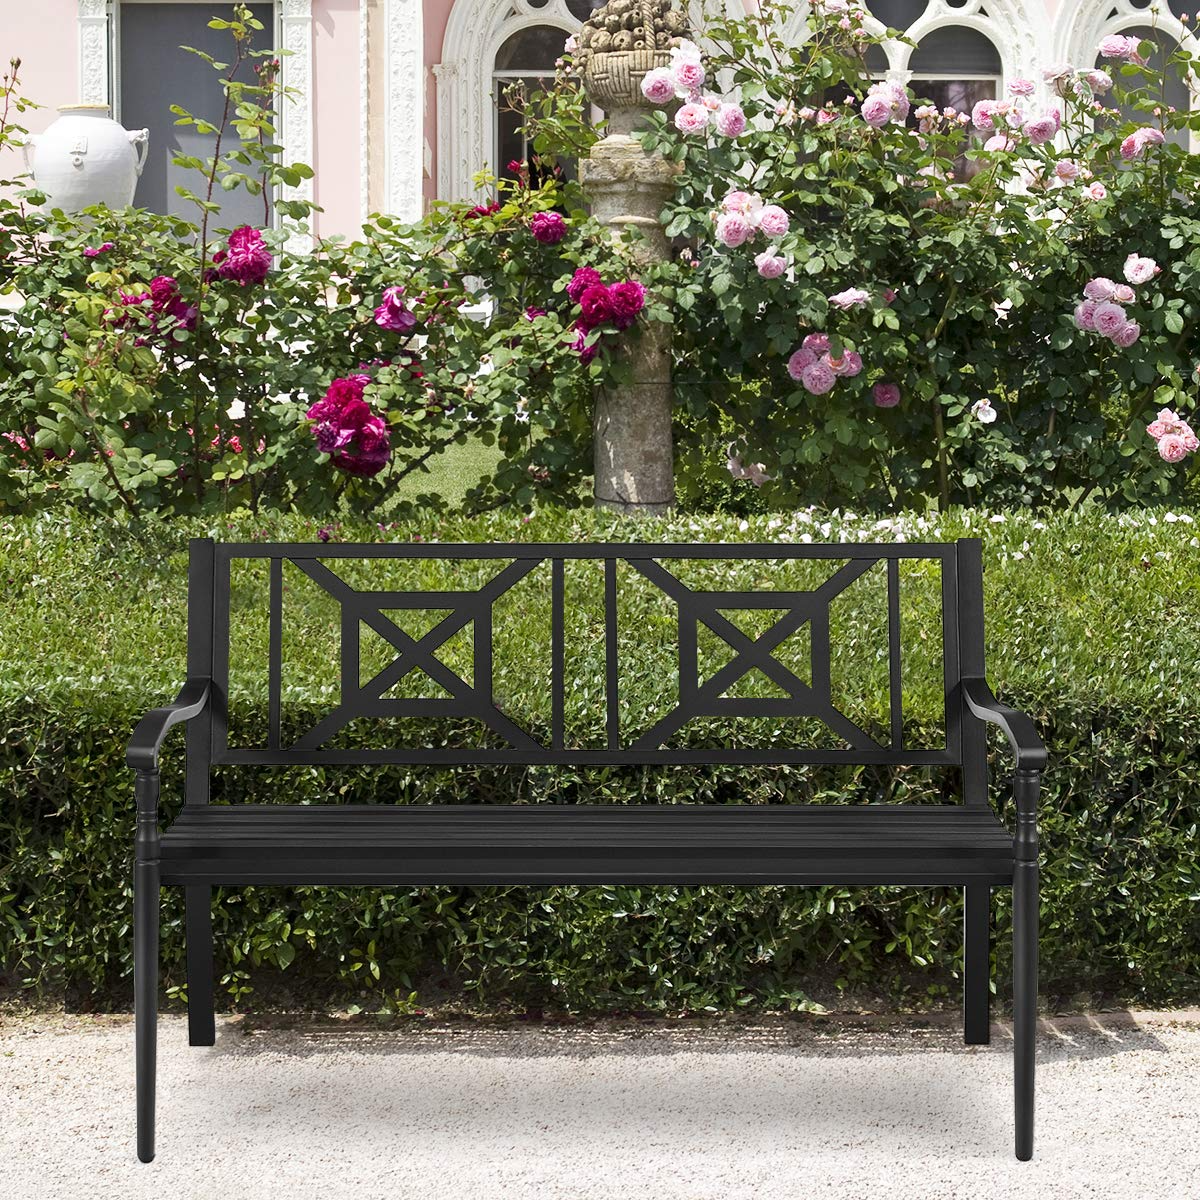 Giantex Elegant Loveseat w/Decorative Backrest & Ergonomic Armrest for Outdoor Garden, Backyard, Lawn, Porch, Path (Black)